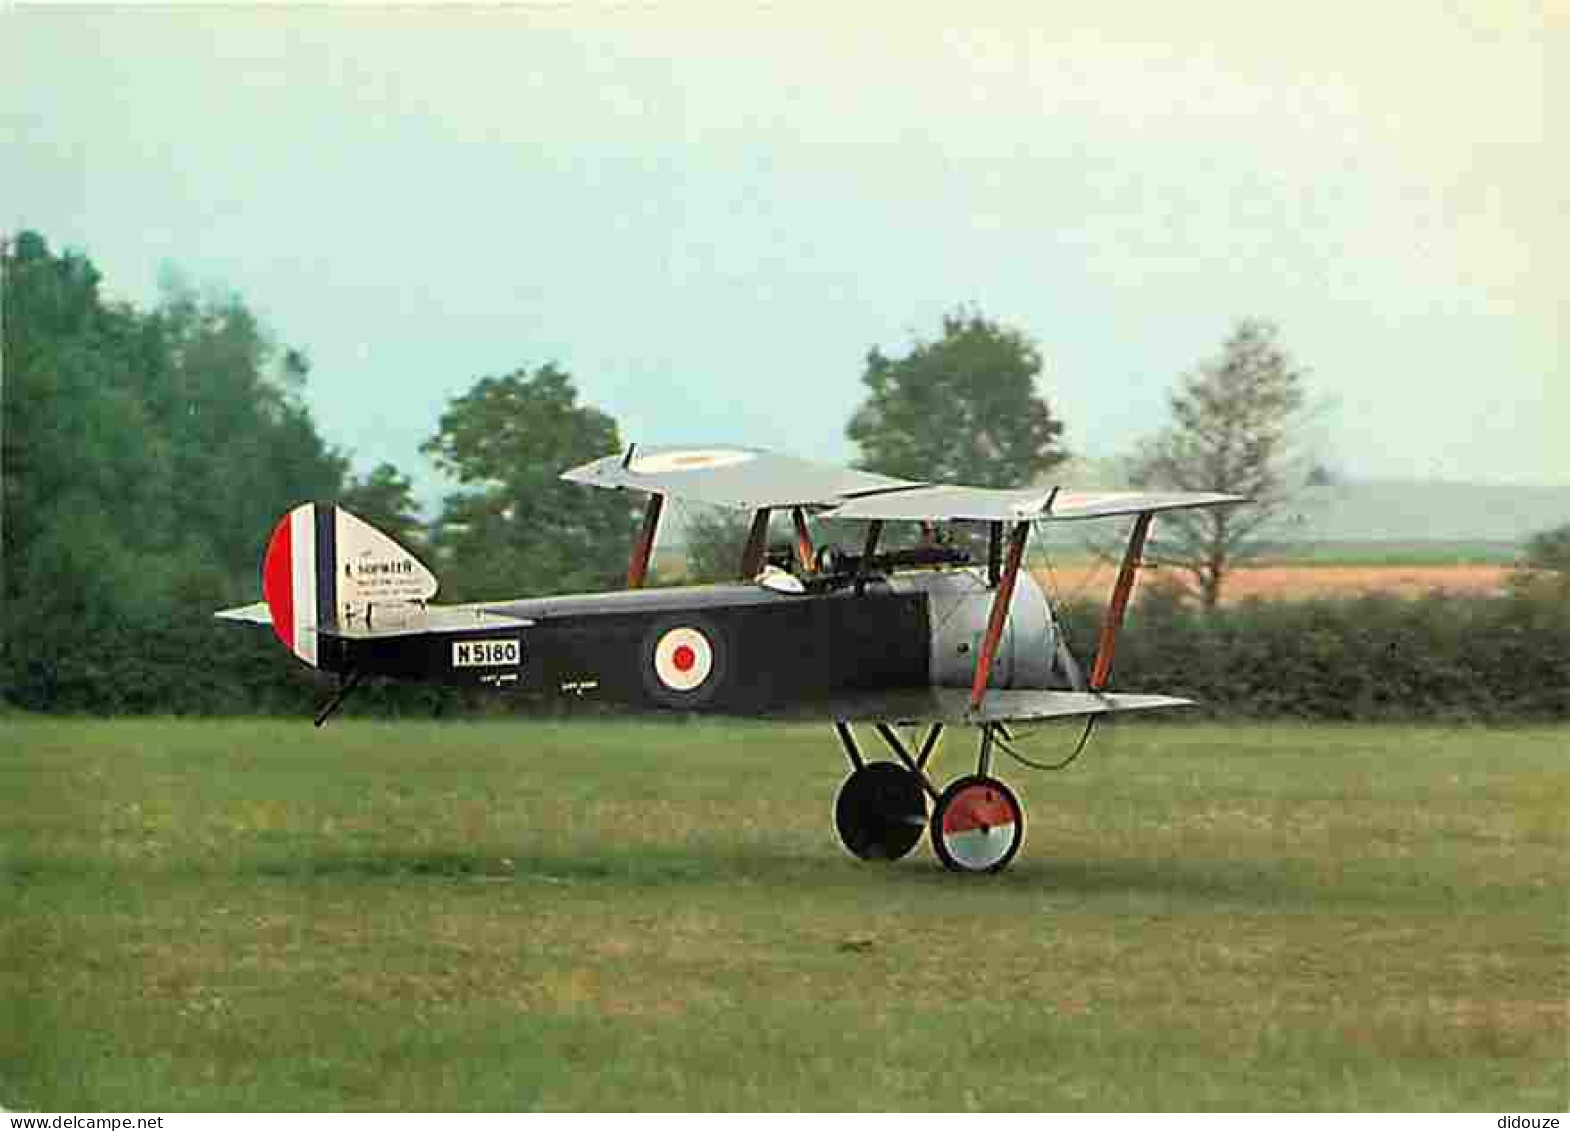 Aviation - Avions - Sopwith Pup 1916 - Carte Neuve - CPM - Voir Scans Recto-Verso - 1914-1918: 1st War